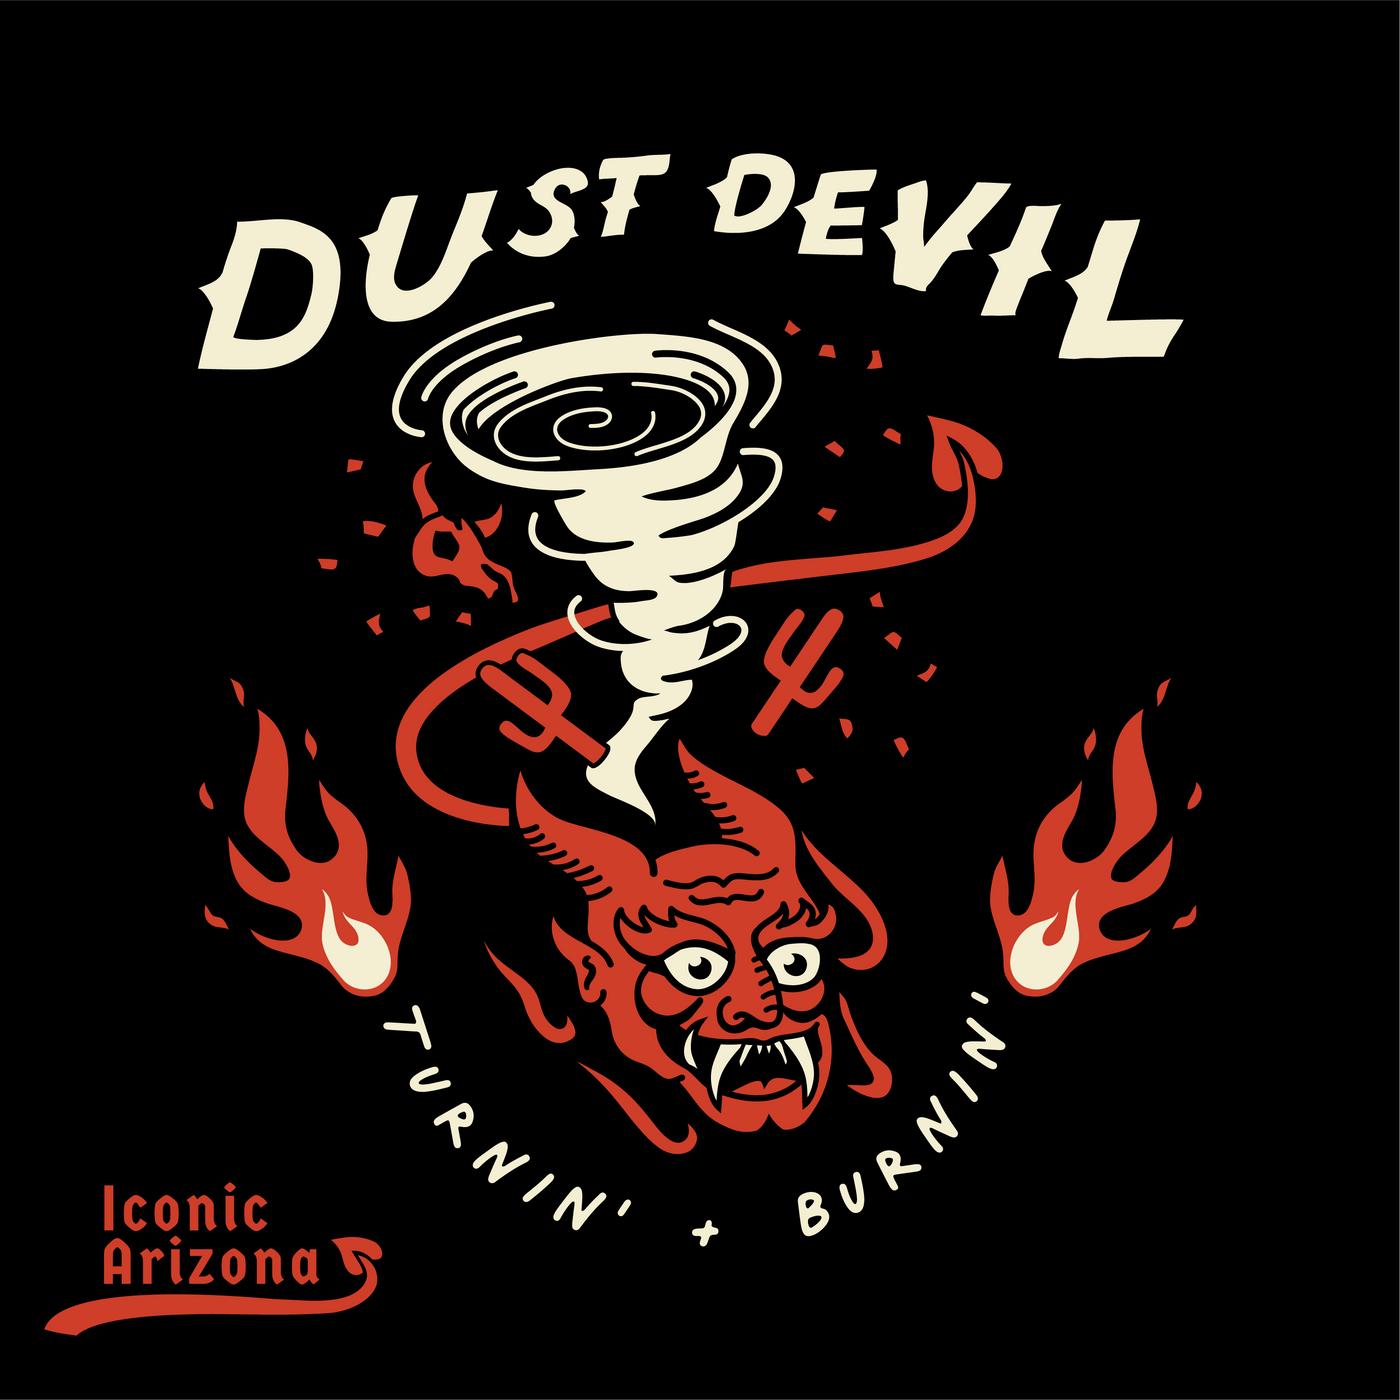 Iconic Arizona Dust Devil Tee